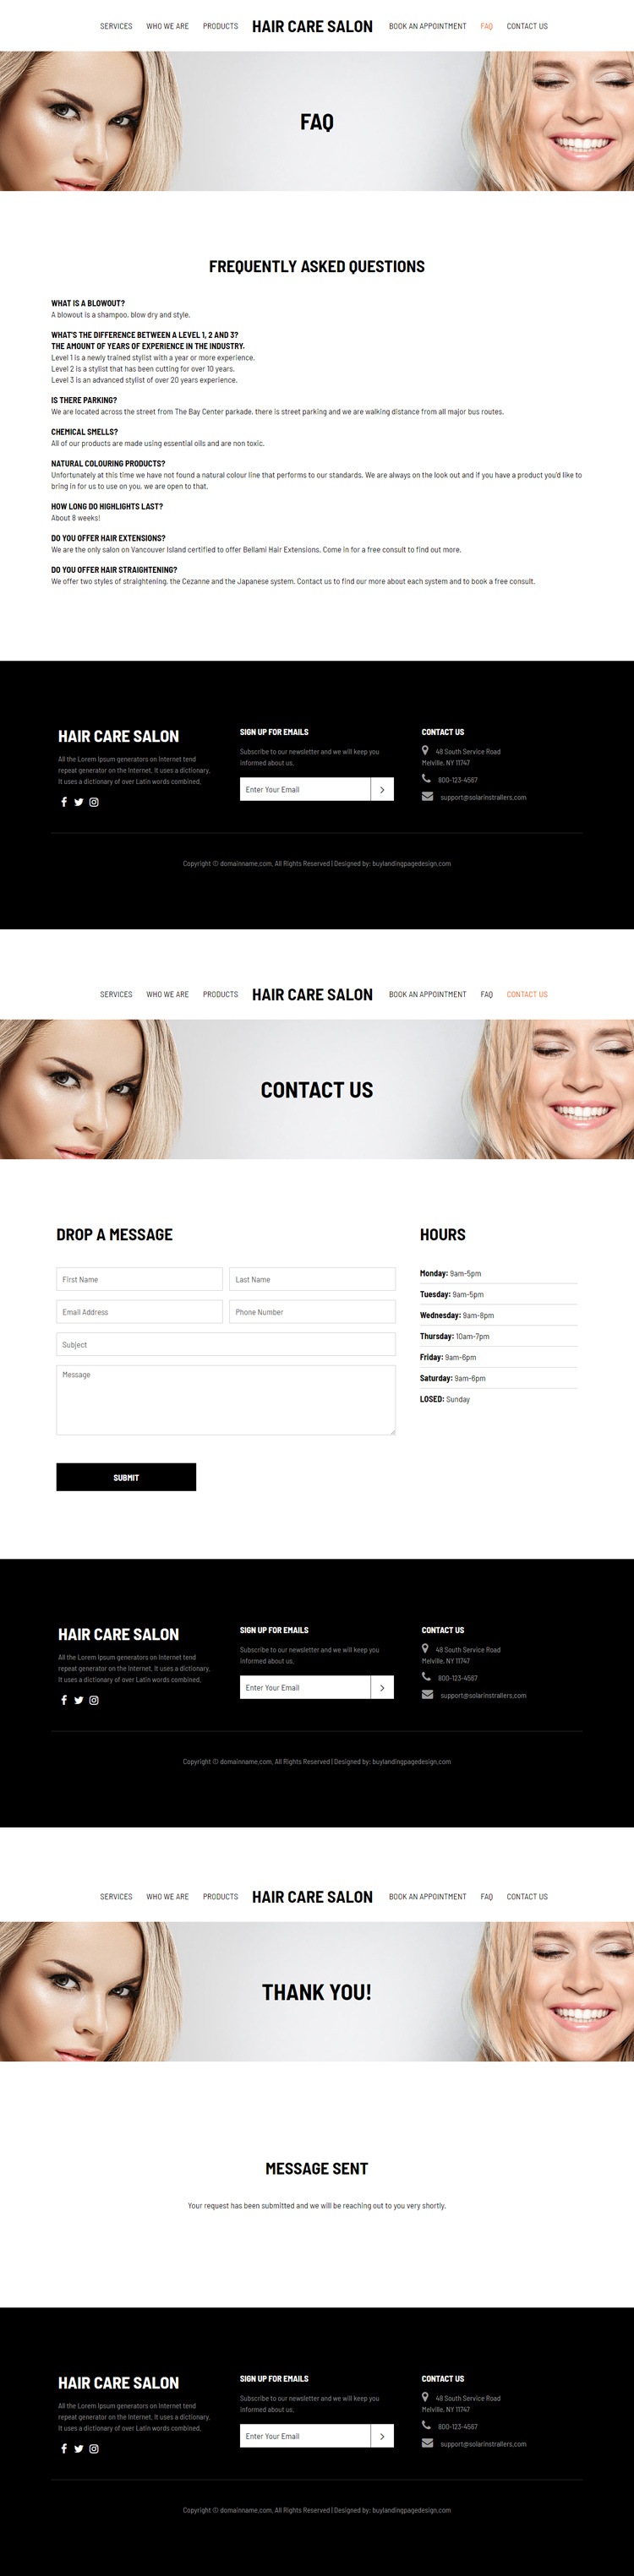 hair care salon responsive website design